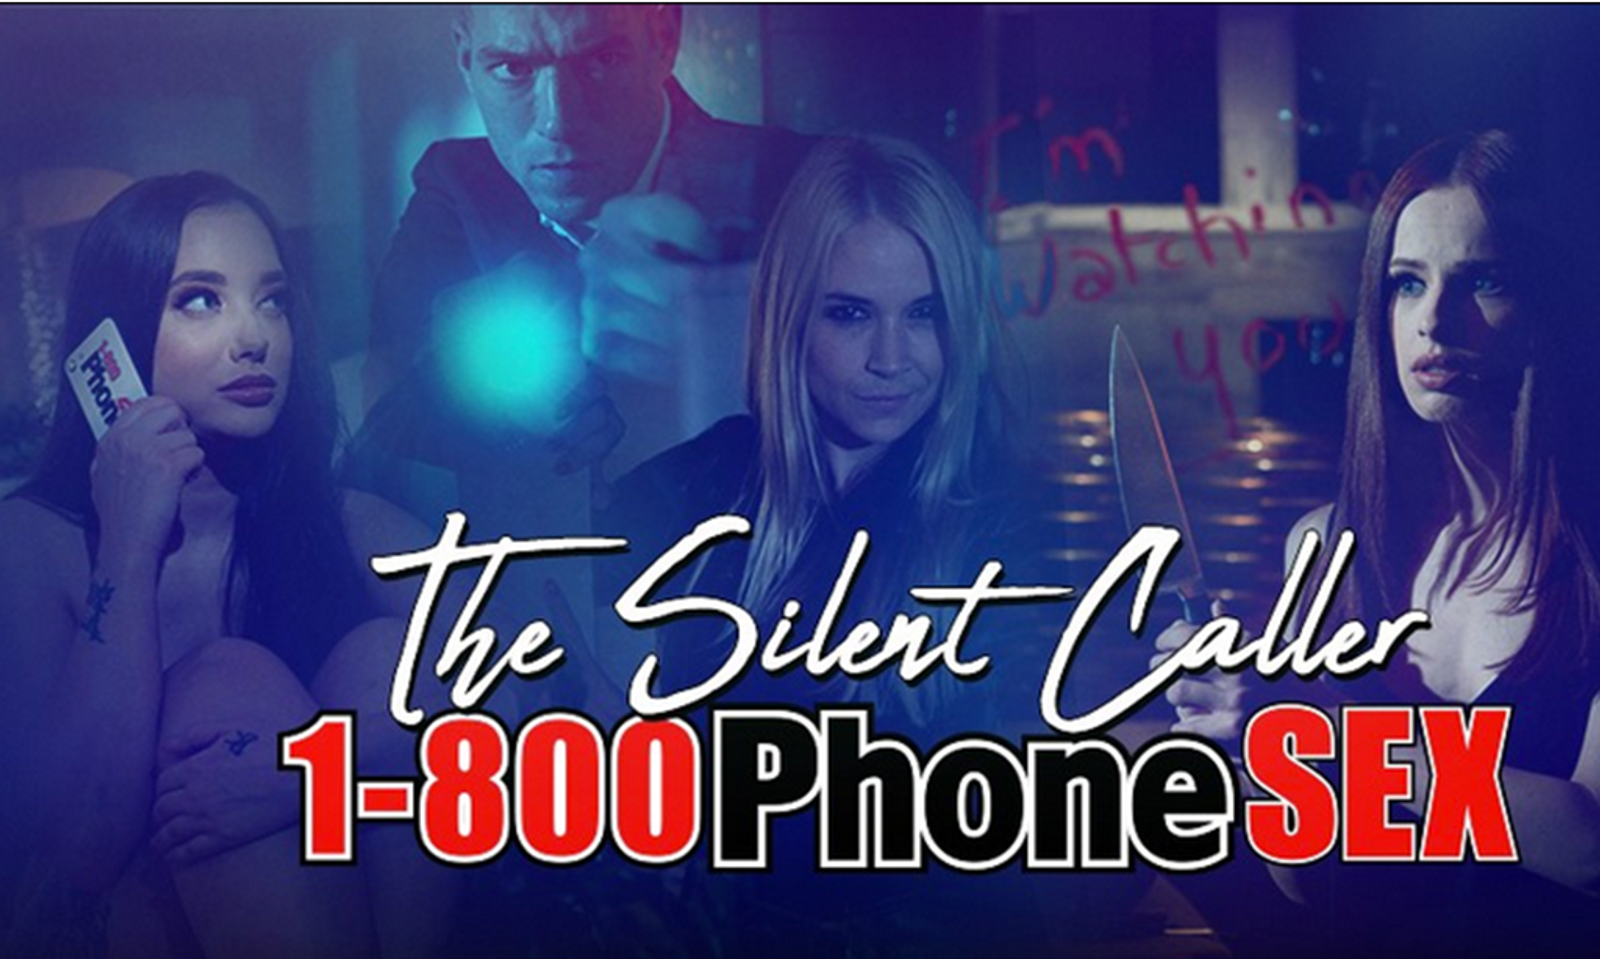 Sarah Vandella Again Stars in New Episode of ‘The Silent Caller'